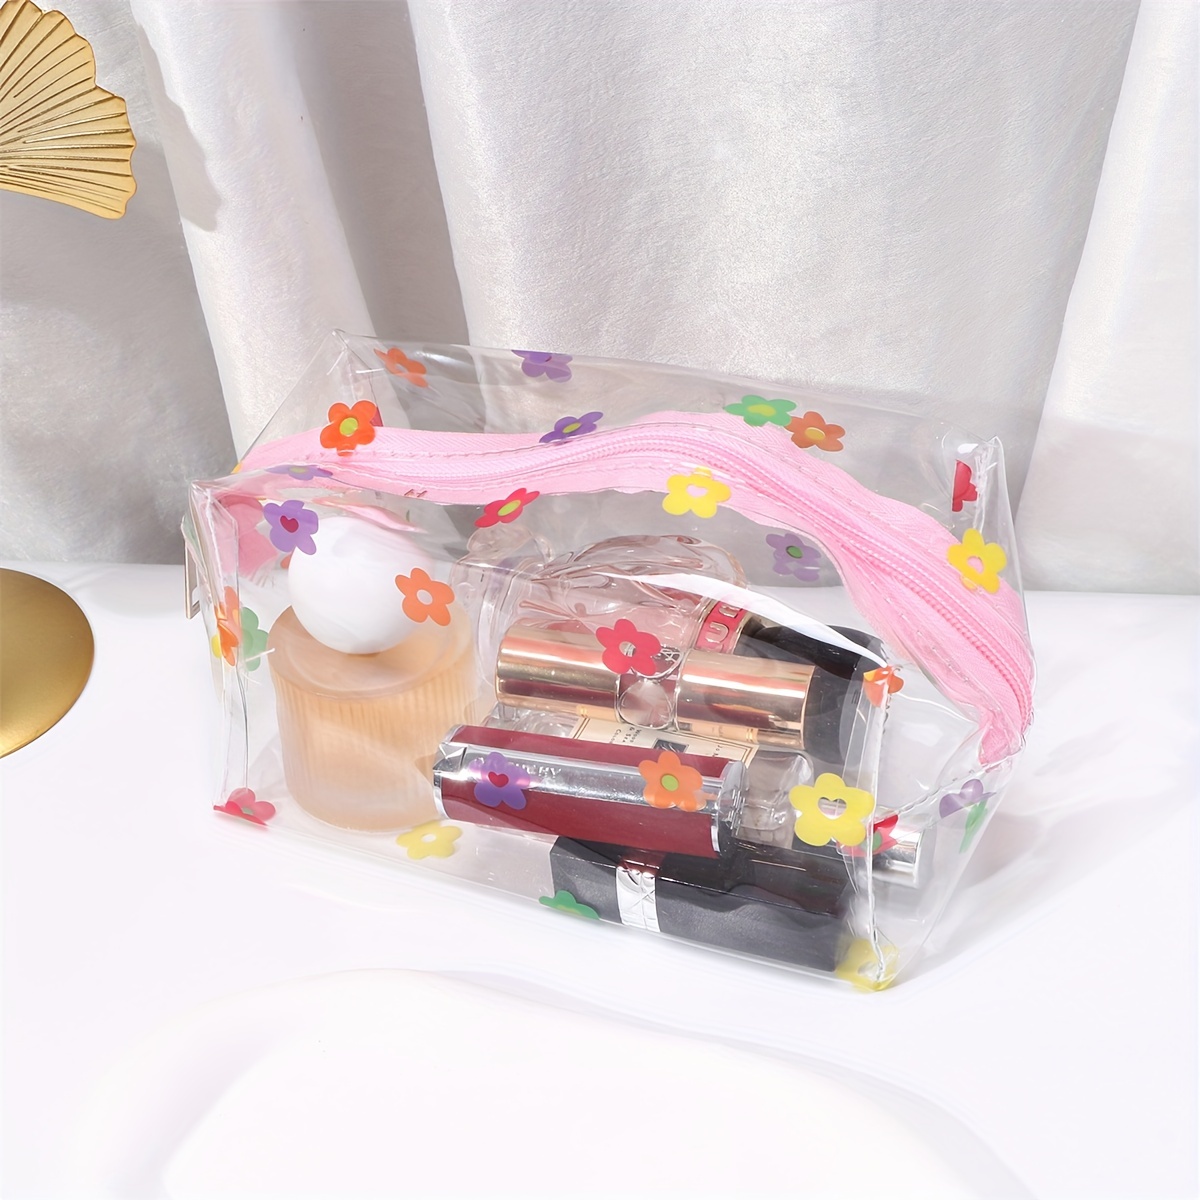 Pompotops Large Pencil Case, Clear PVC Zipper Pencil Bag Toiletries Exam  Pen Pencil Pouch Case Travel Luggage Make Up Cosmetic Bag 